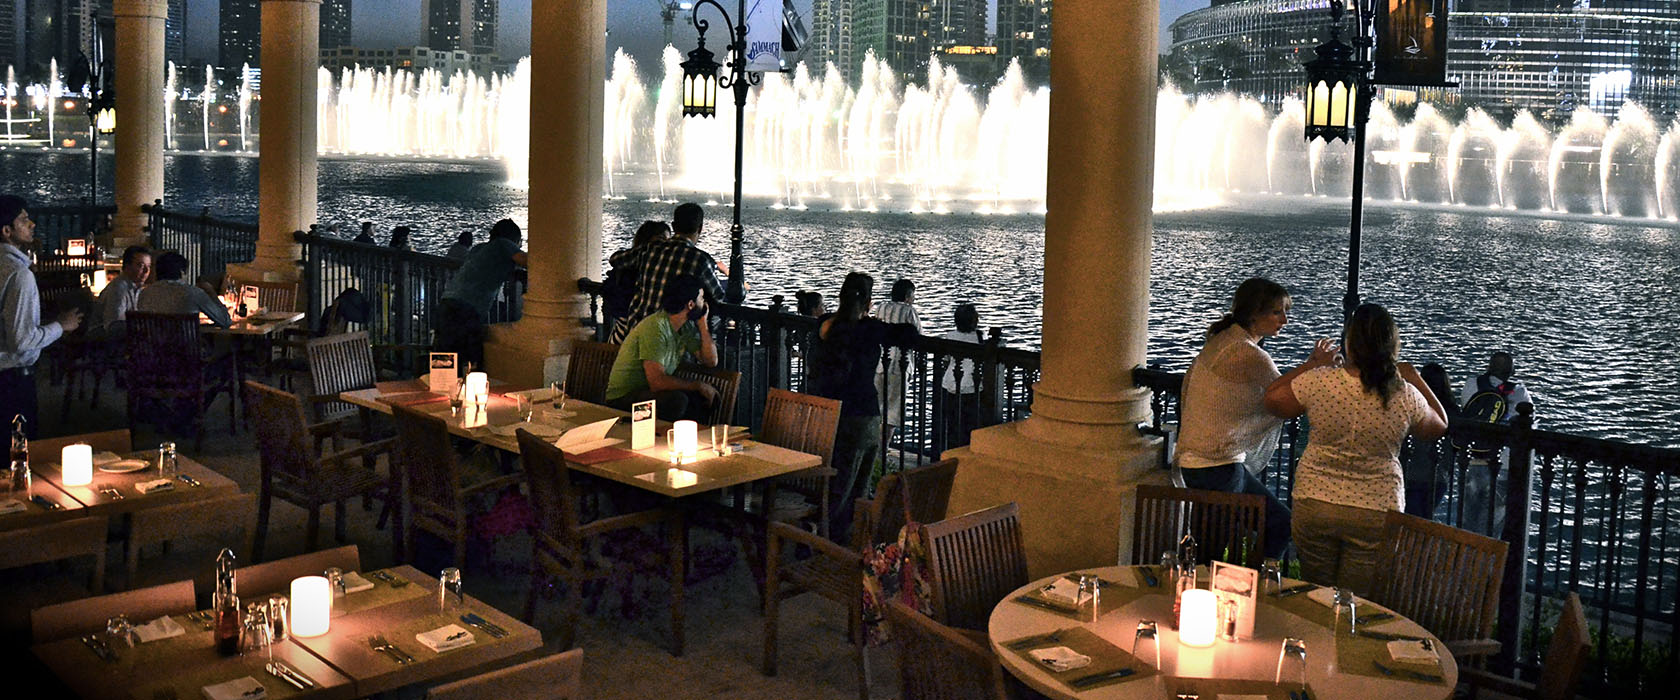 Luxury Dubai City Tour + Lunch at AbdelWahab Restaurant - Souk Al Bahar - From Dubai